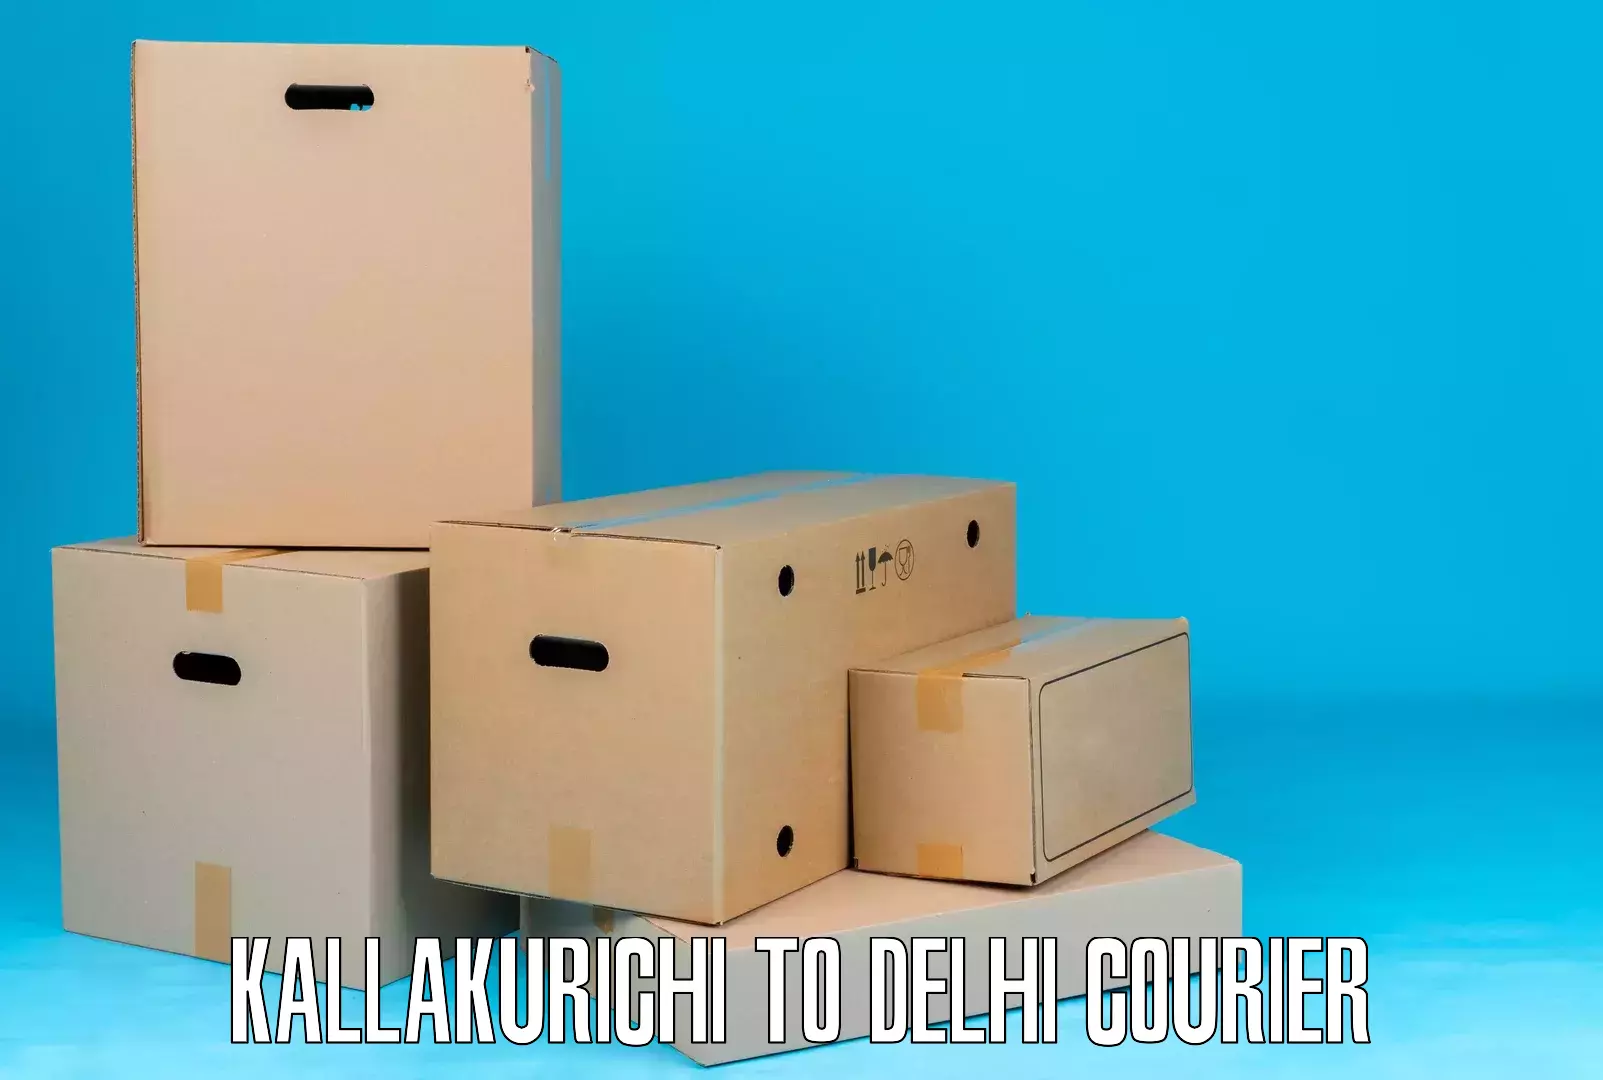 Advanced shipping technology Kallakurichi to Kalkaji